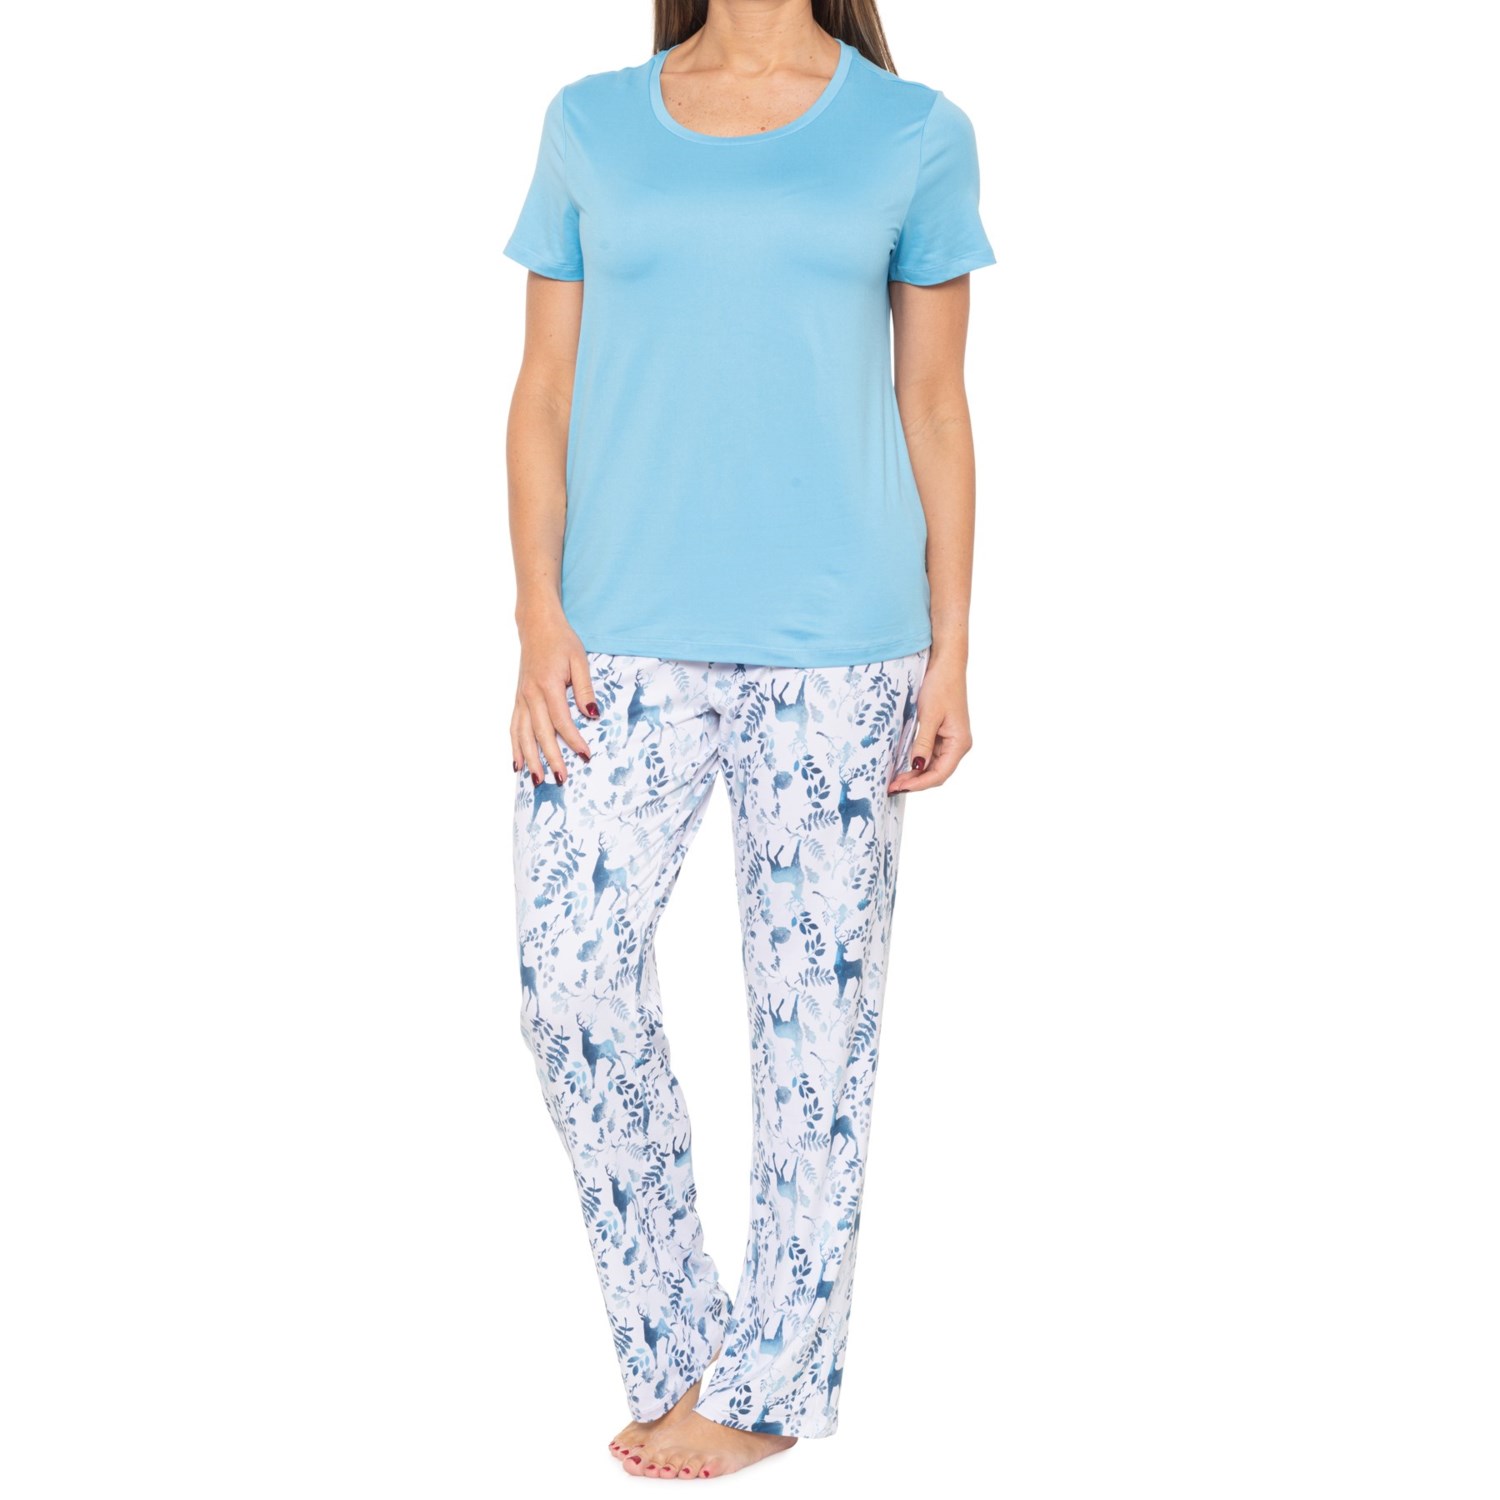 Eddie Bauer Bliss Knit Pajamas (For Women) - Save 77%